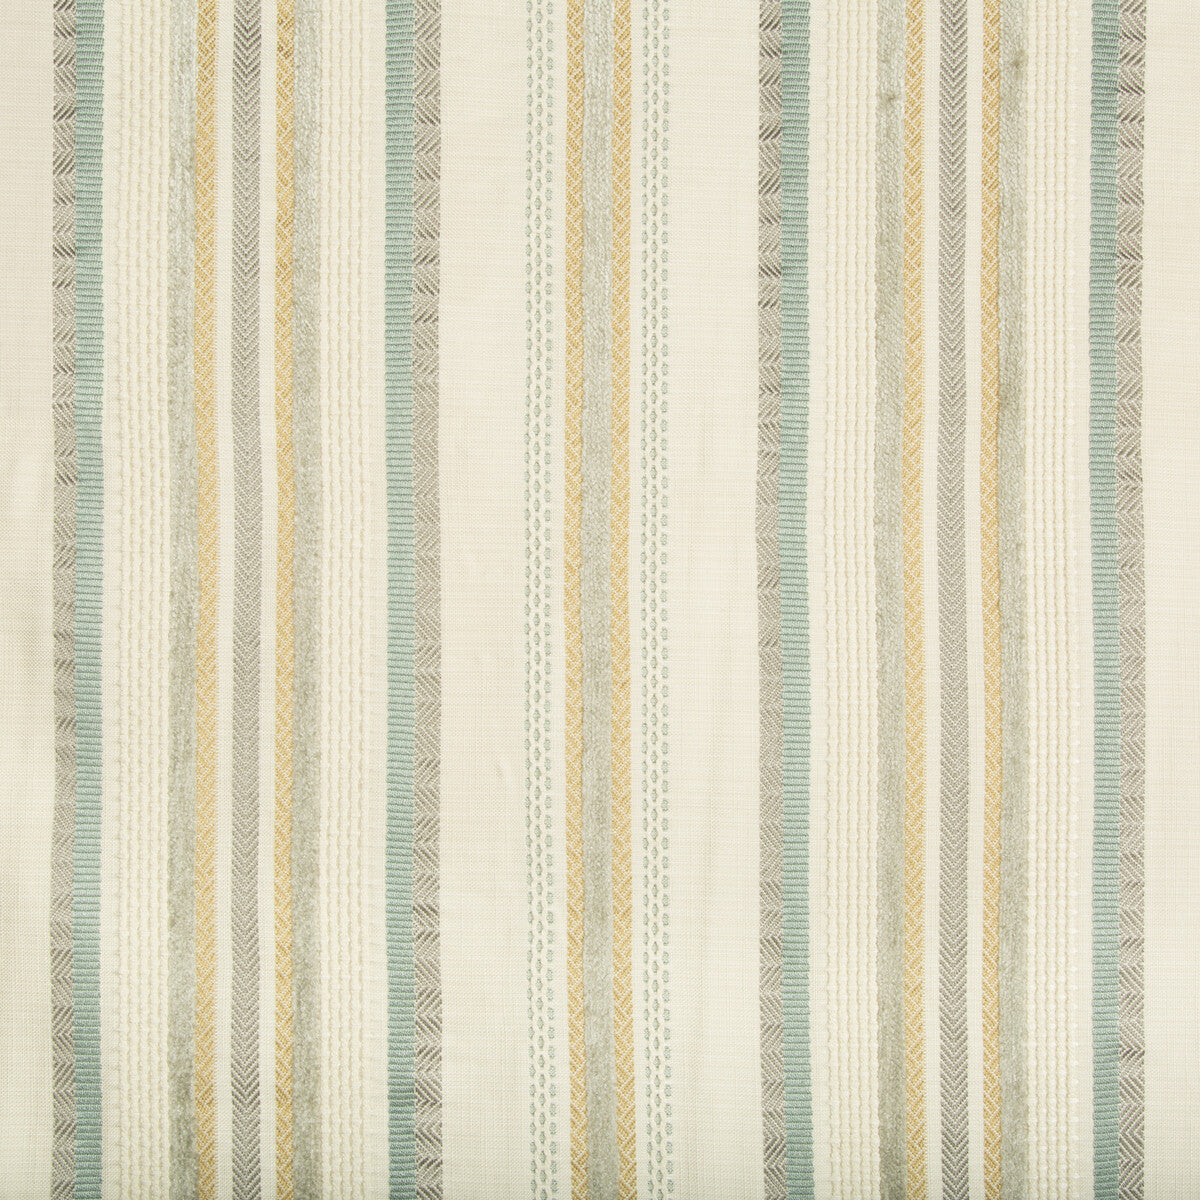 Kravet Design fabric in 34727-1635 color - pattern 34727.1635.0 - by Kravet Design in the Gis collection